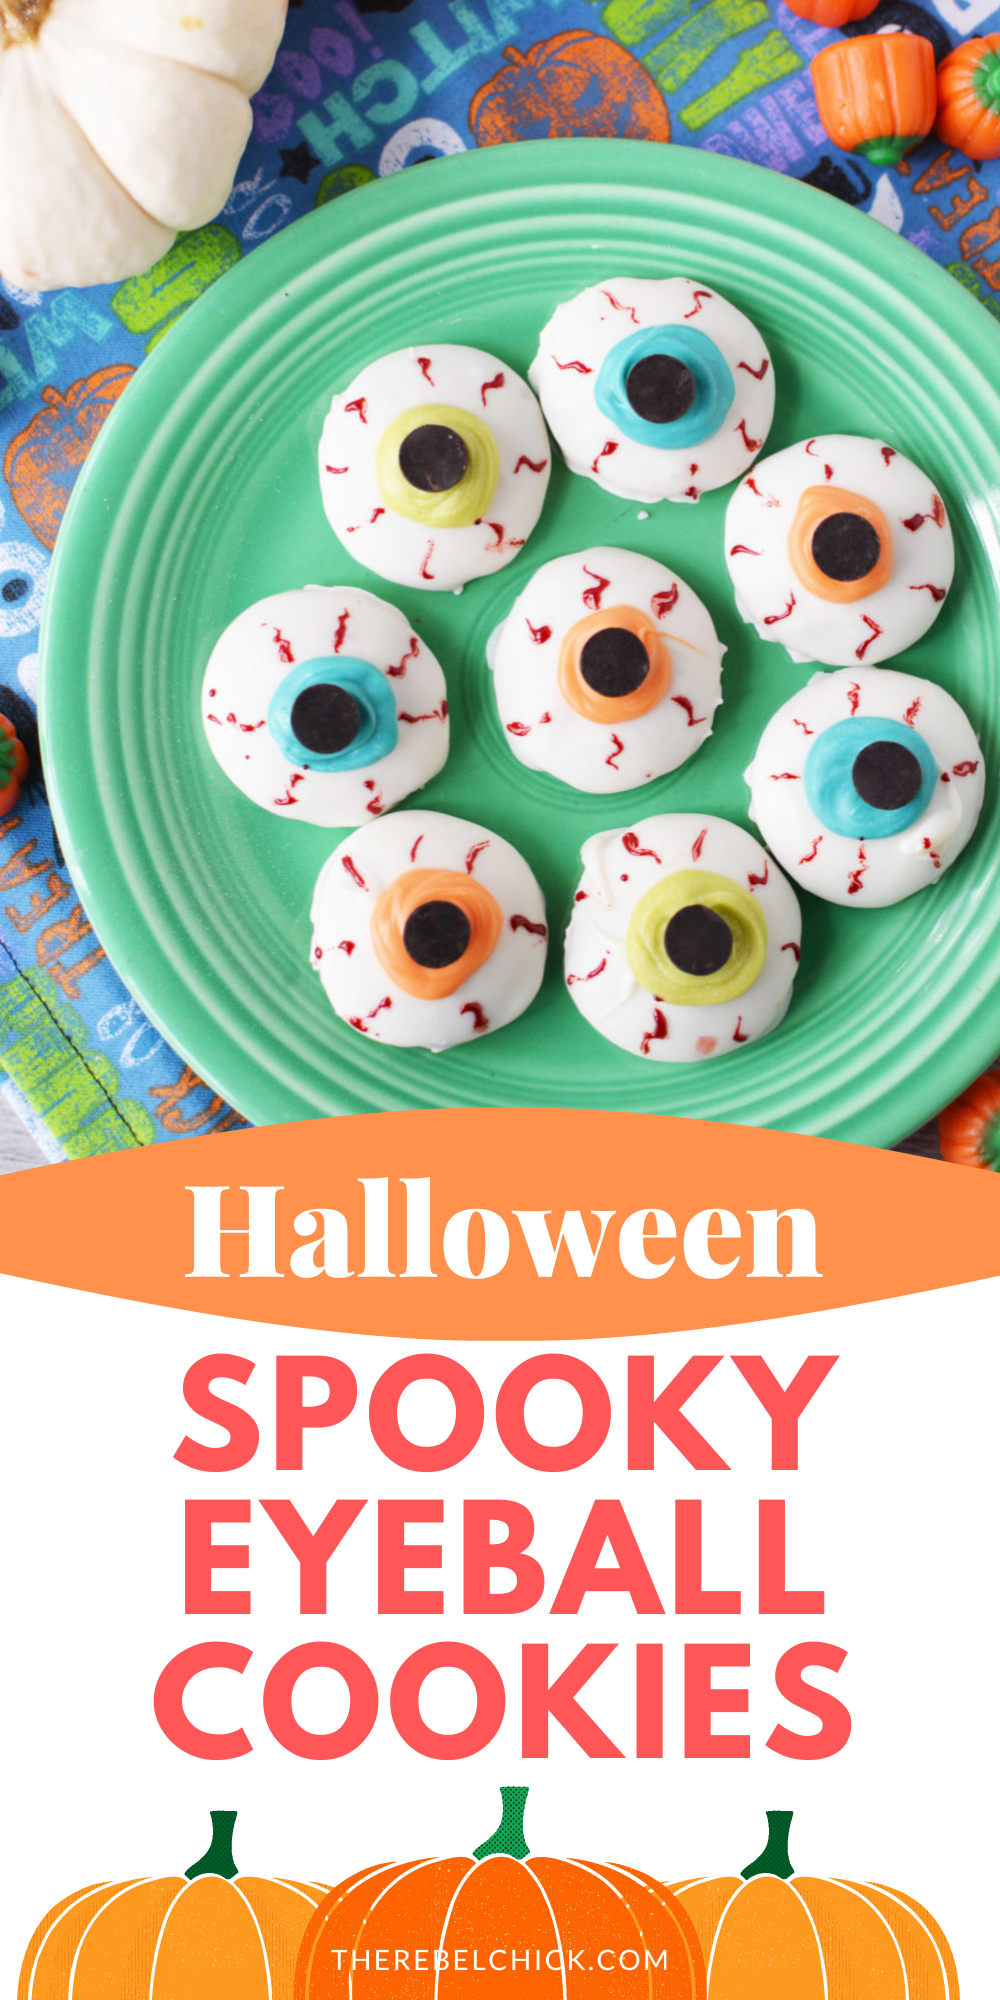 Spooky Halloween Eyeball Cookies Recipe